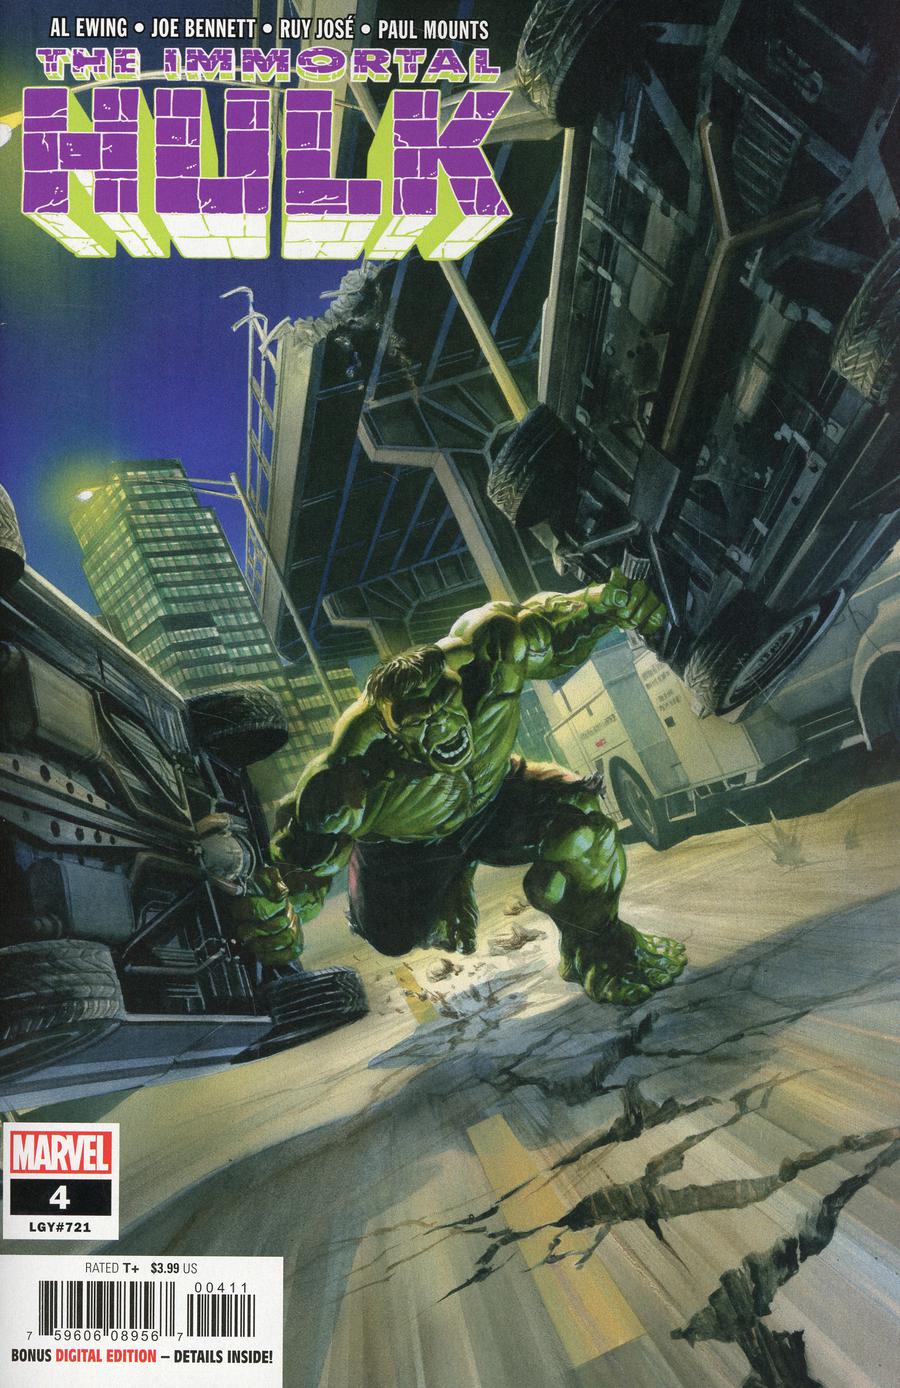 Immortal Hulk #4 (LGY #721) [2018]